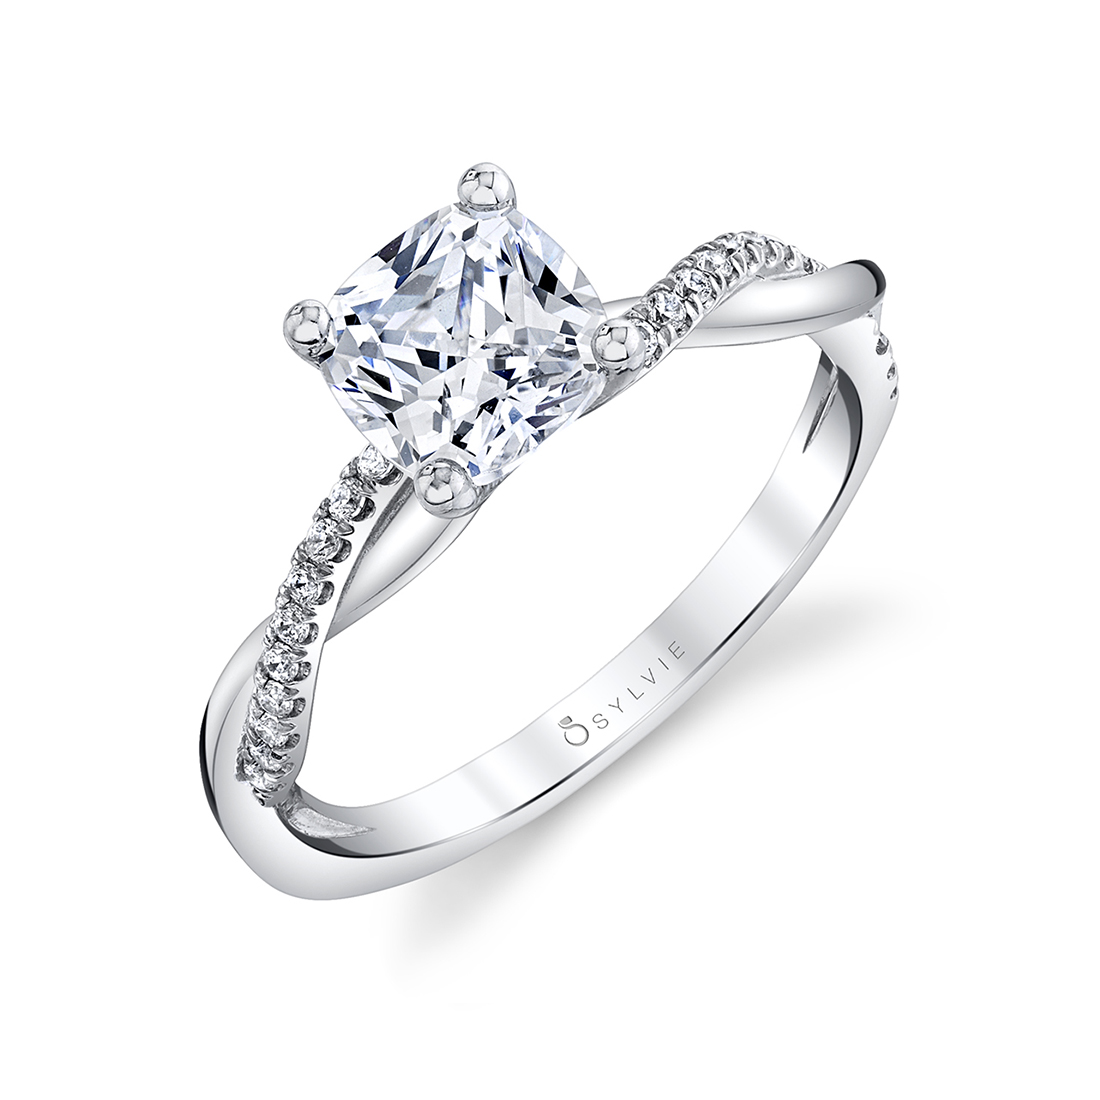 Cushion Cut Diamond Spiral Engagement Ring - Yasmine S1524-014A8W15C ...